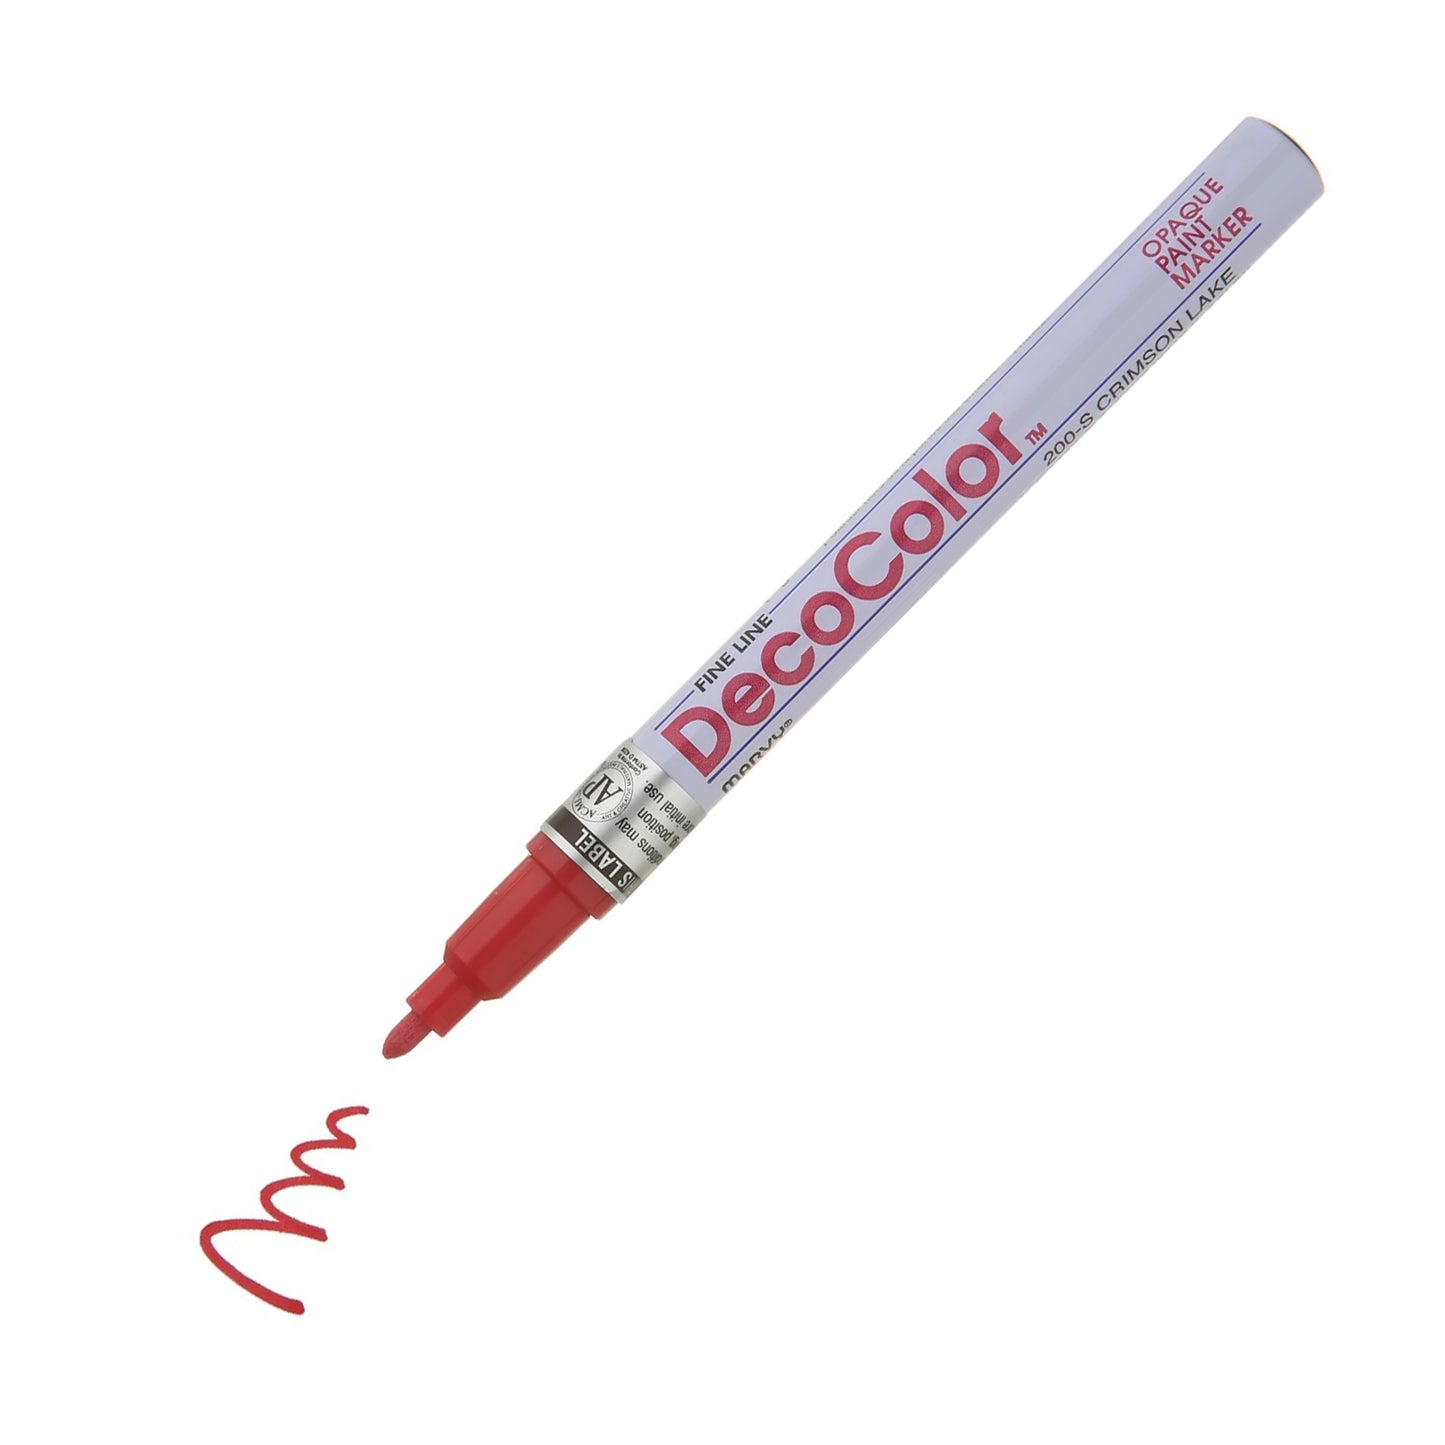 Pennarello a vernice Decocolor, punta fine da 3 mm